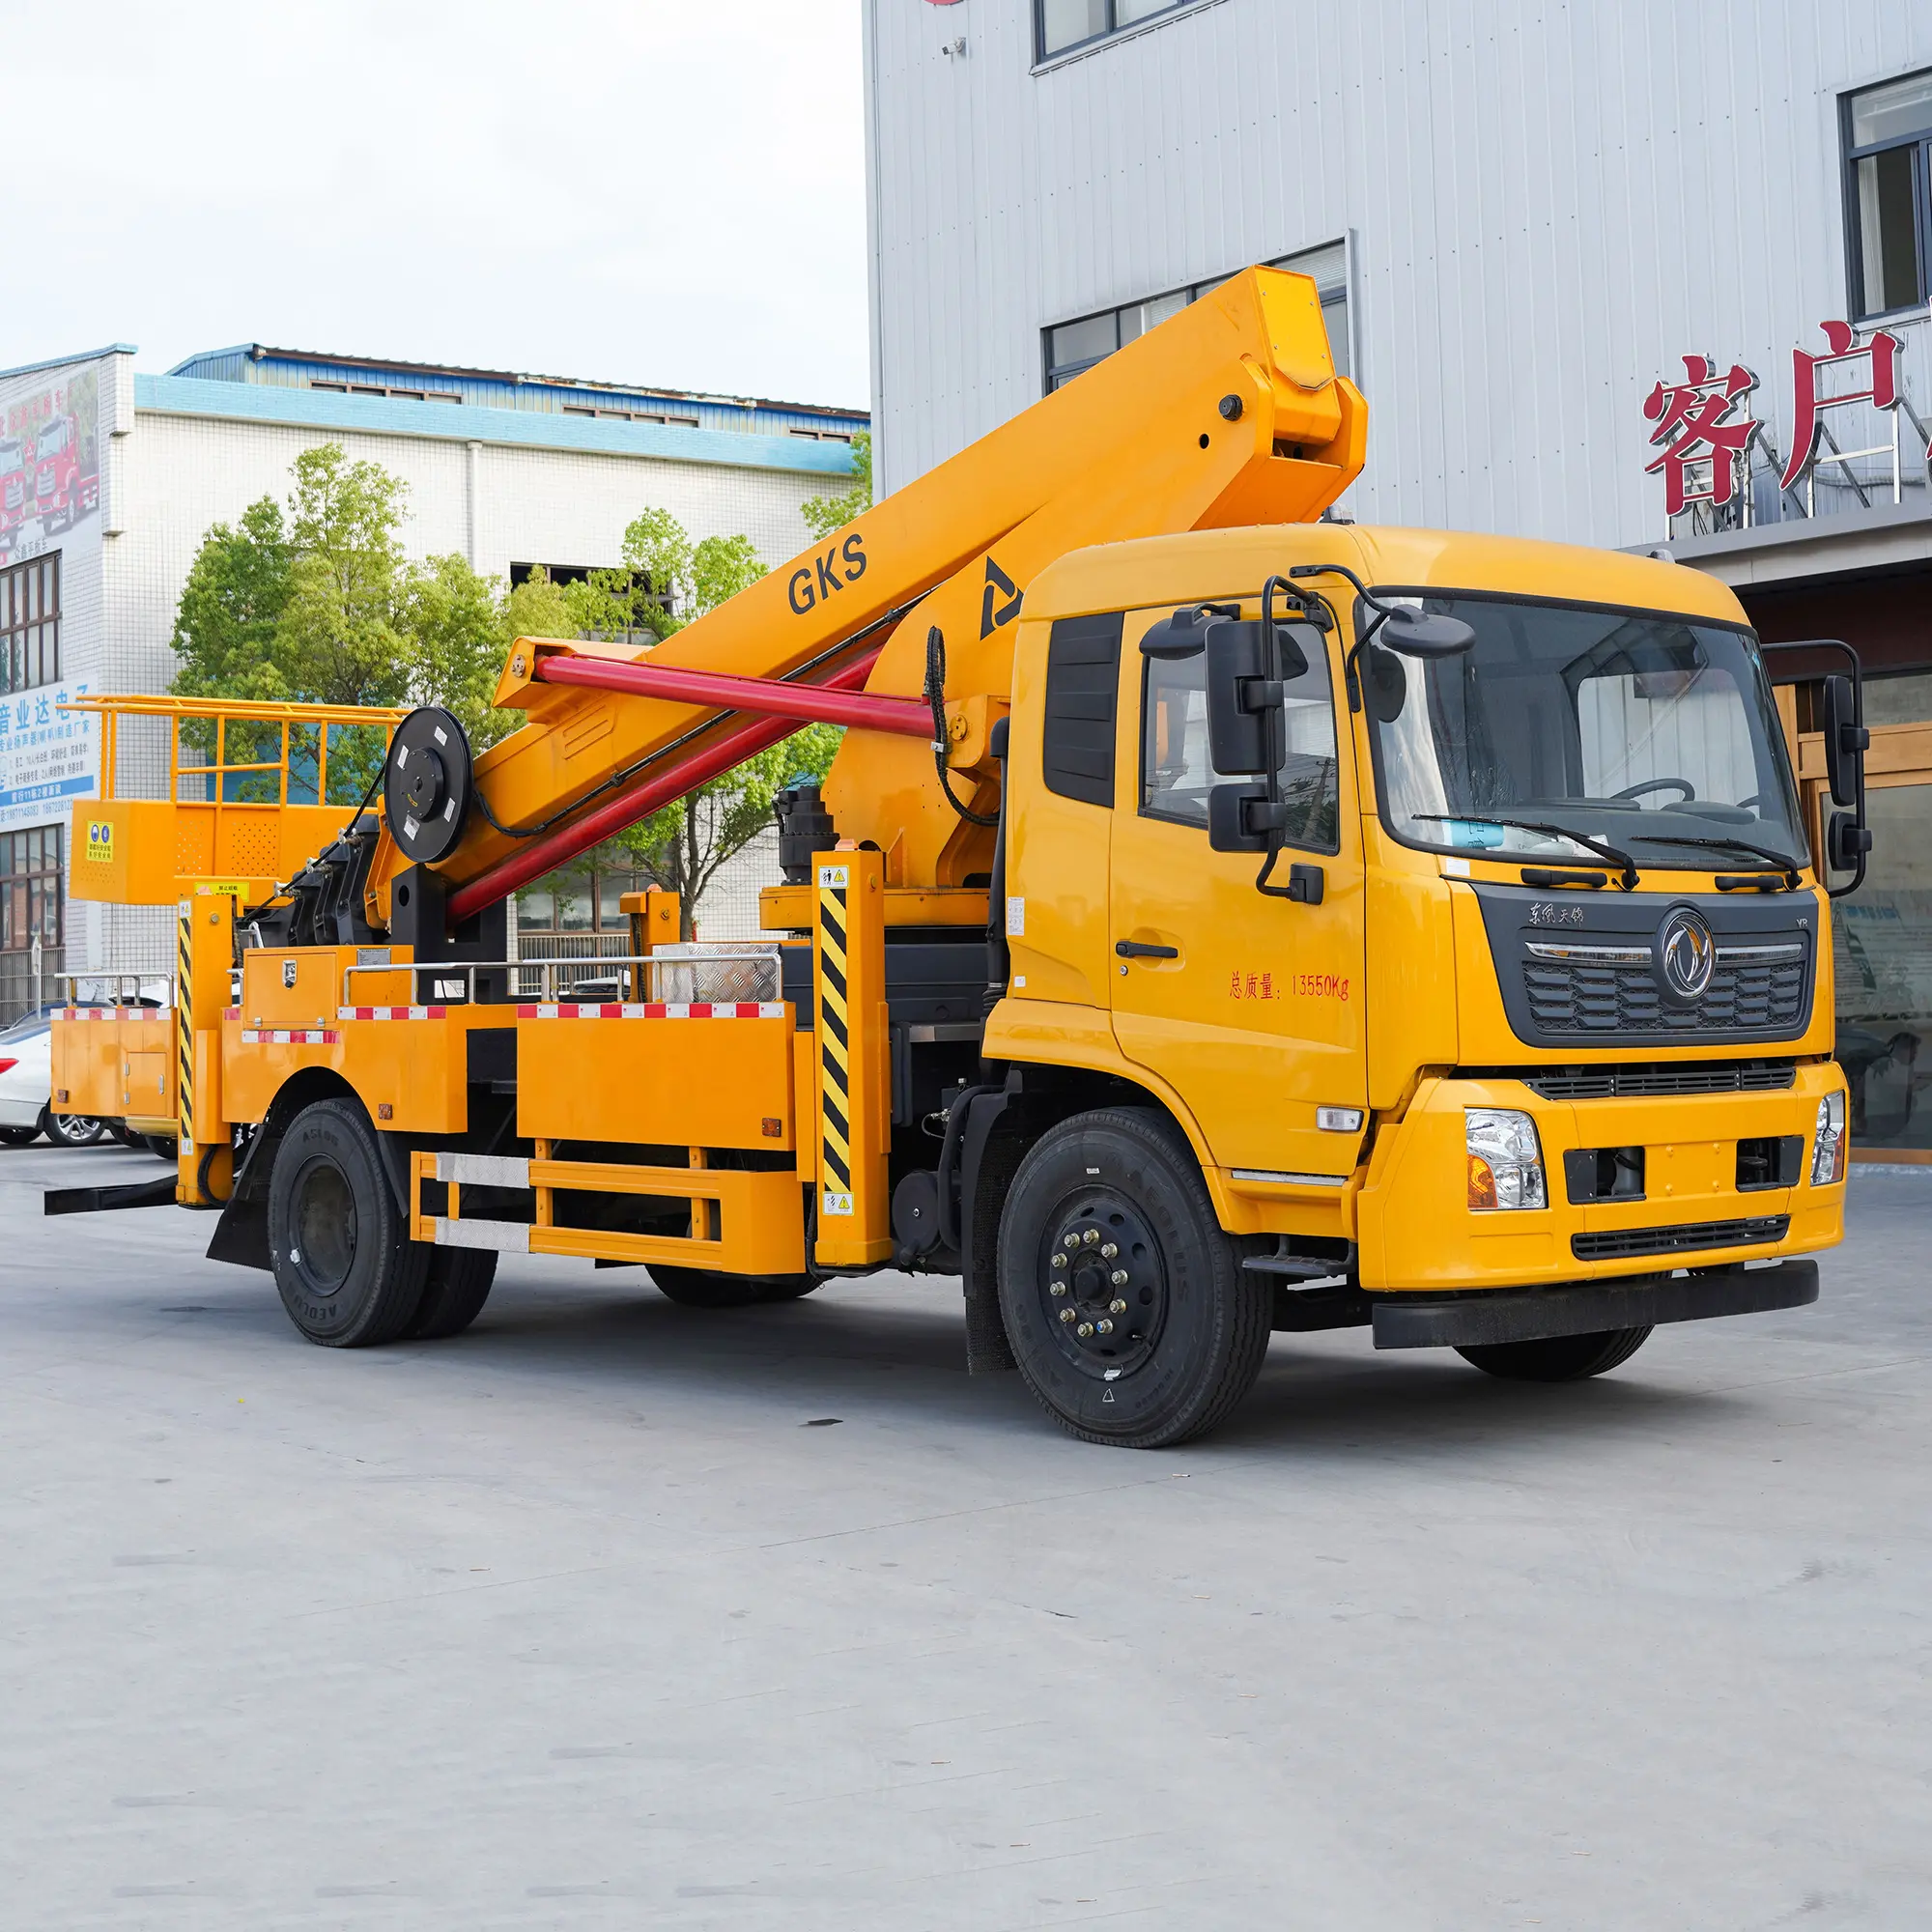 30M 트럭 작업 공중 Dongfeng 6 바퀴 32M 트럭 장착 공중 작업 플랫폼 체코 바구니로